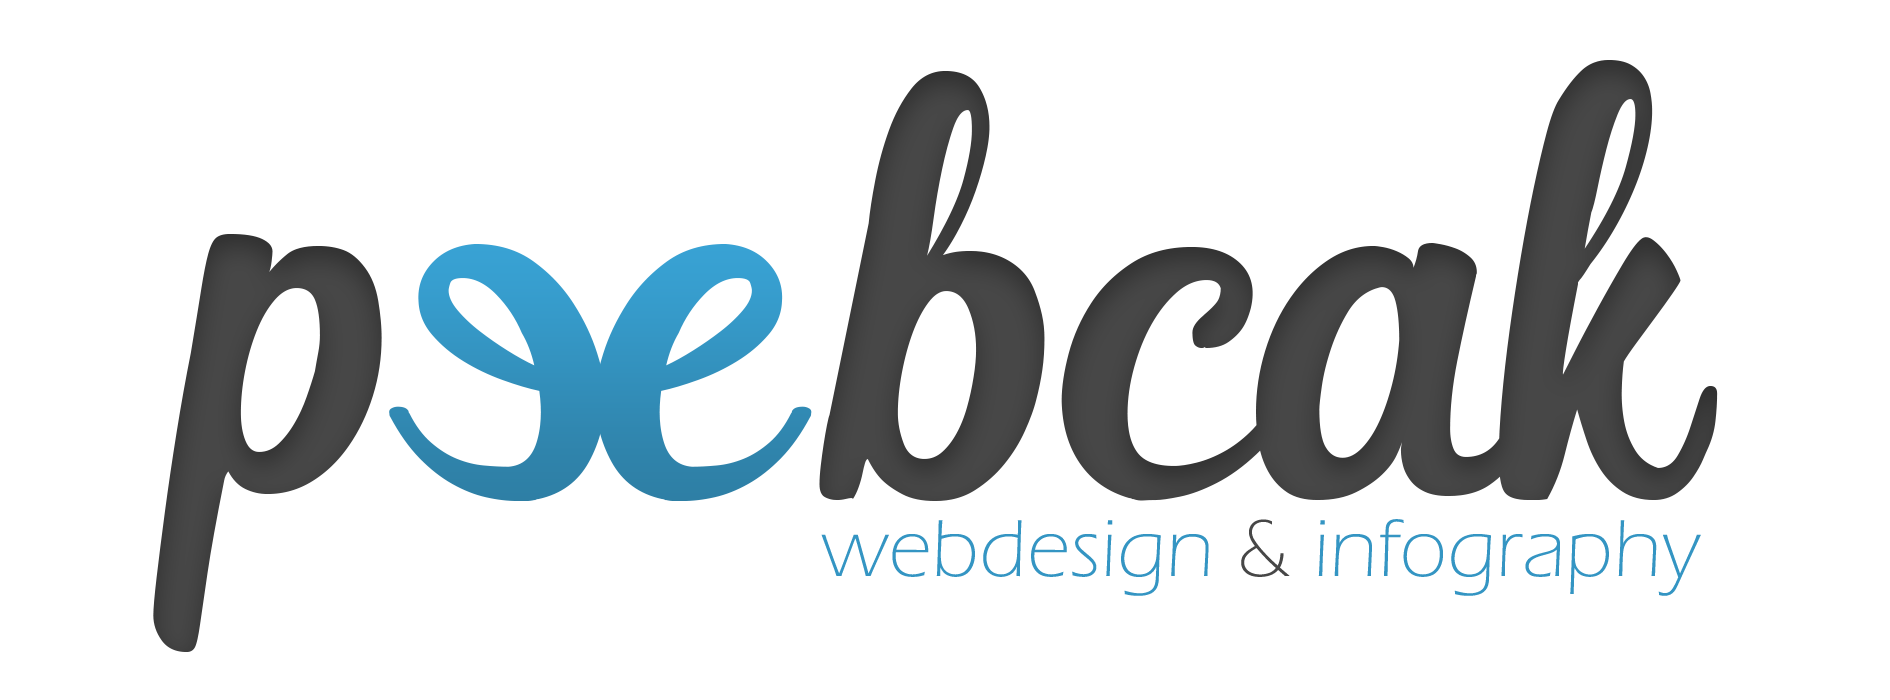 PEEBCAK - Webdesign & Infography